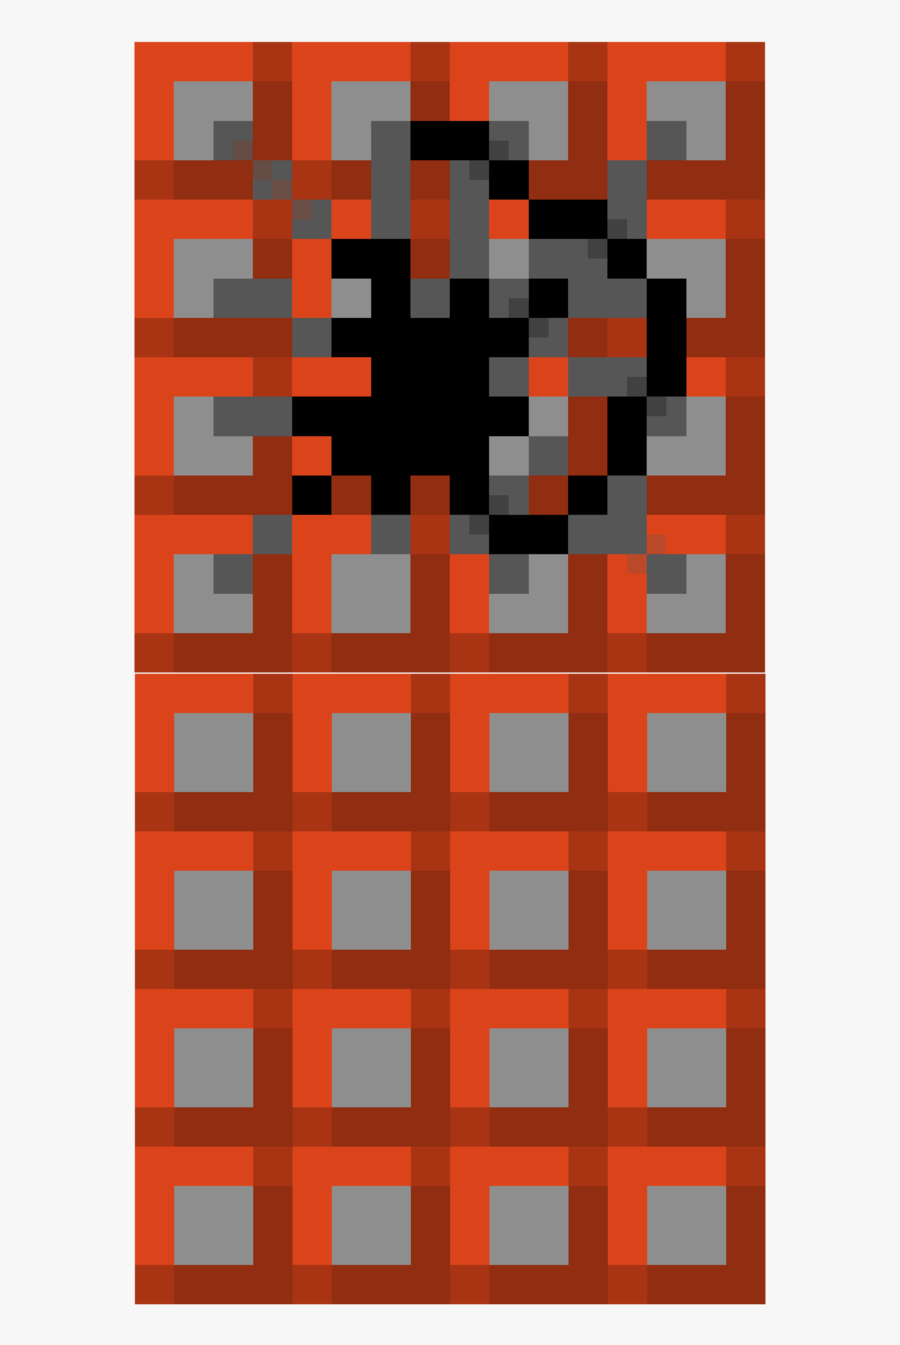 Minecraft Tnt Cliparts - Minecraft Tnt Pixel Art, Transparent Clipart